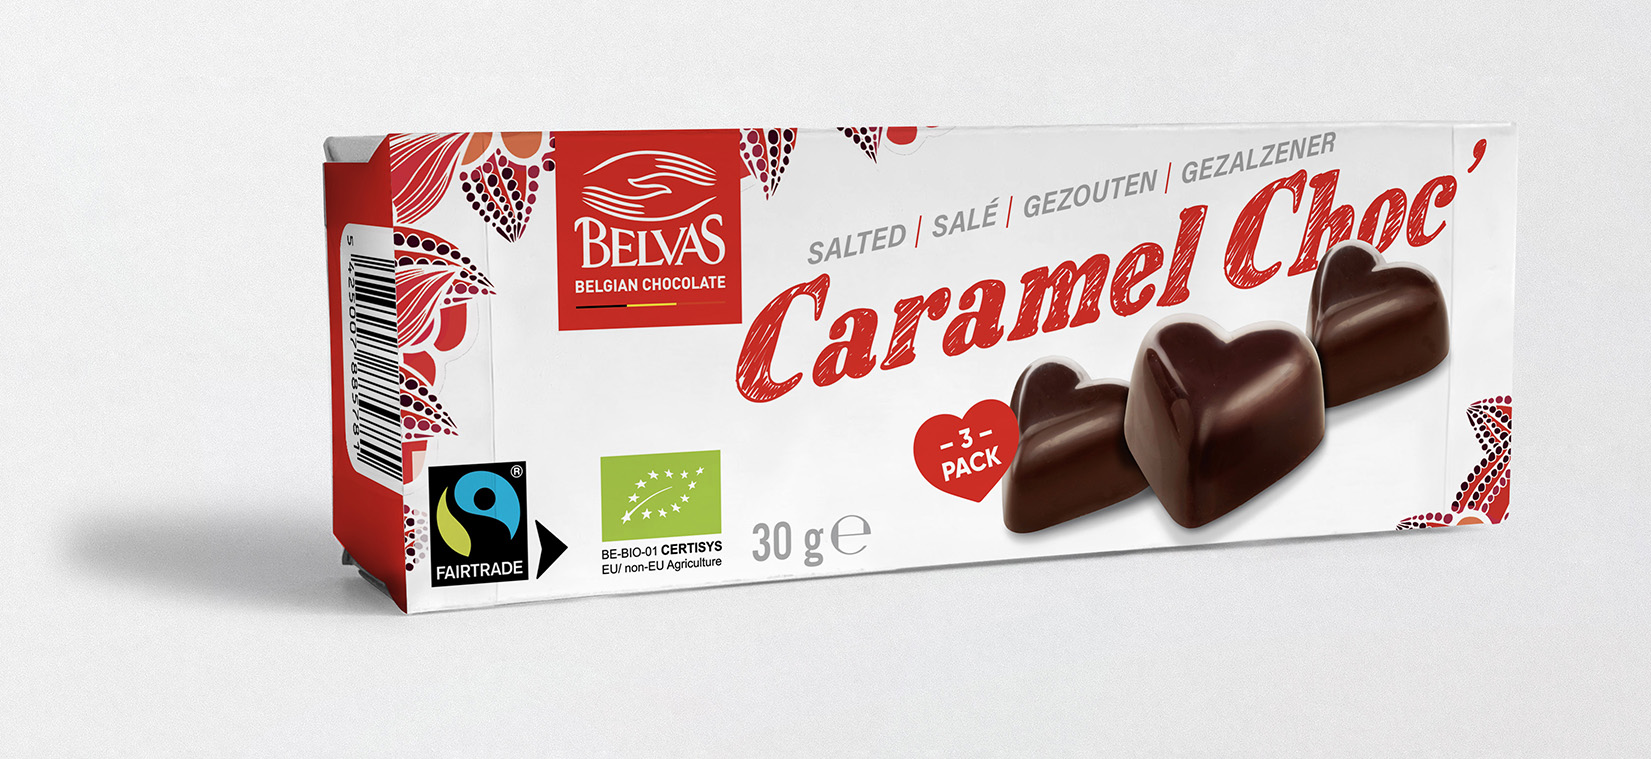 Belvas Chocolate lovers snack